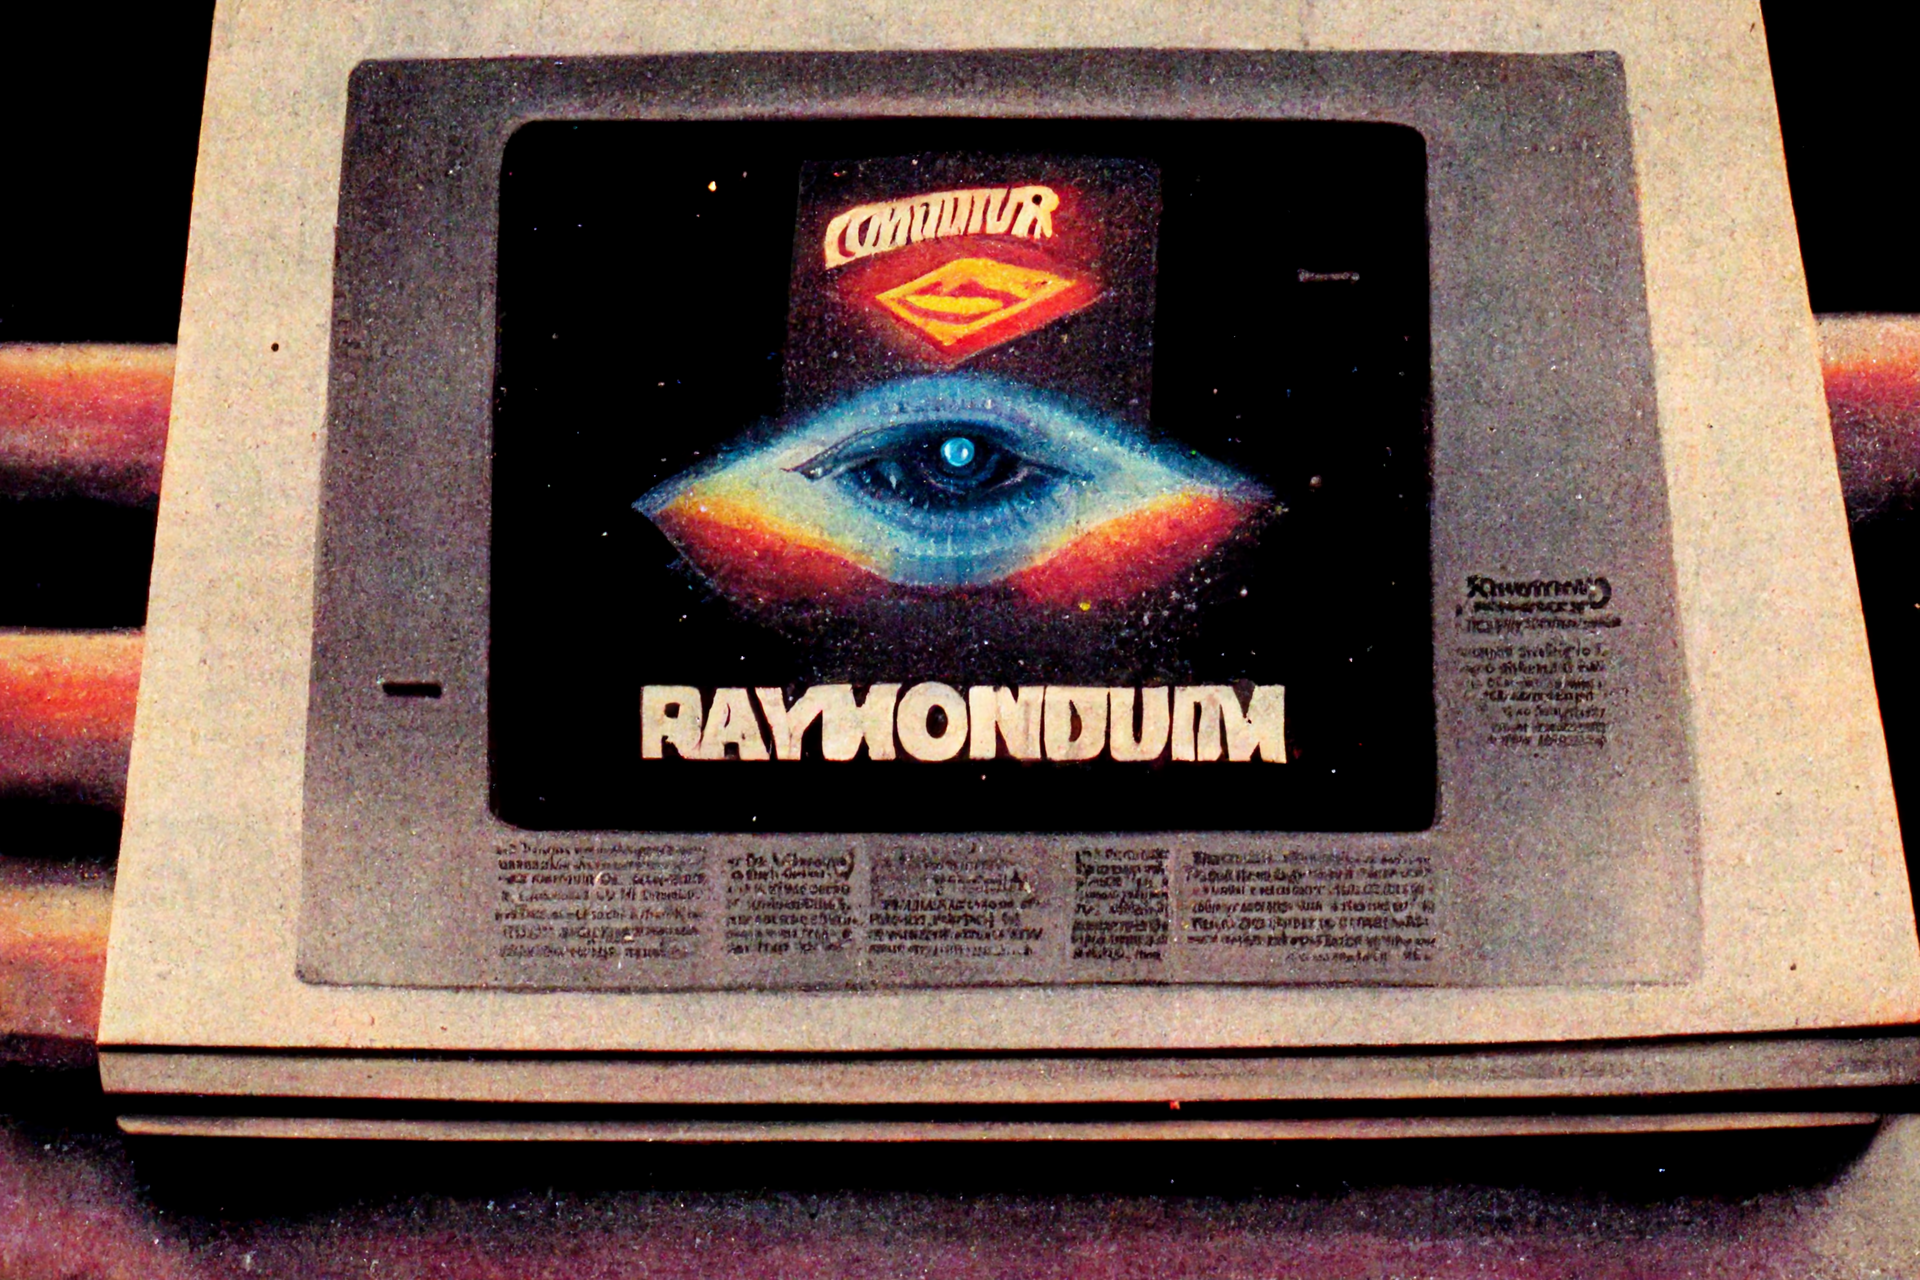 VisiteurNoir_The_super_computer_Raymondium_ad_from_1982_magazin_4f4b81aa-736f-4c76-b1d2-7533b3f0953c.png